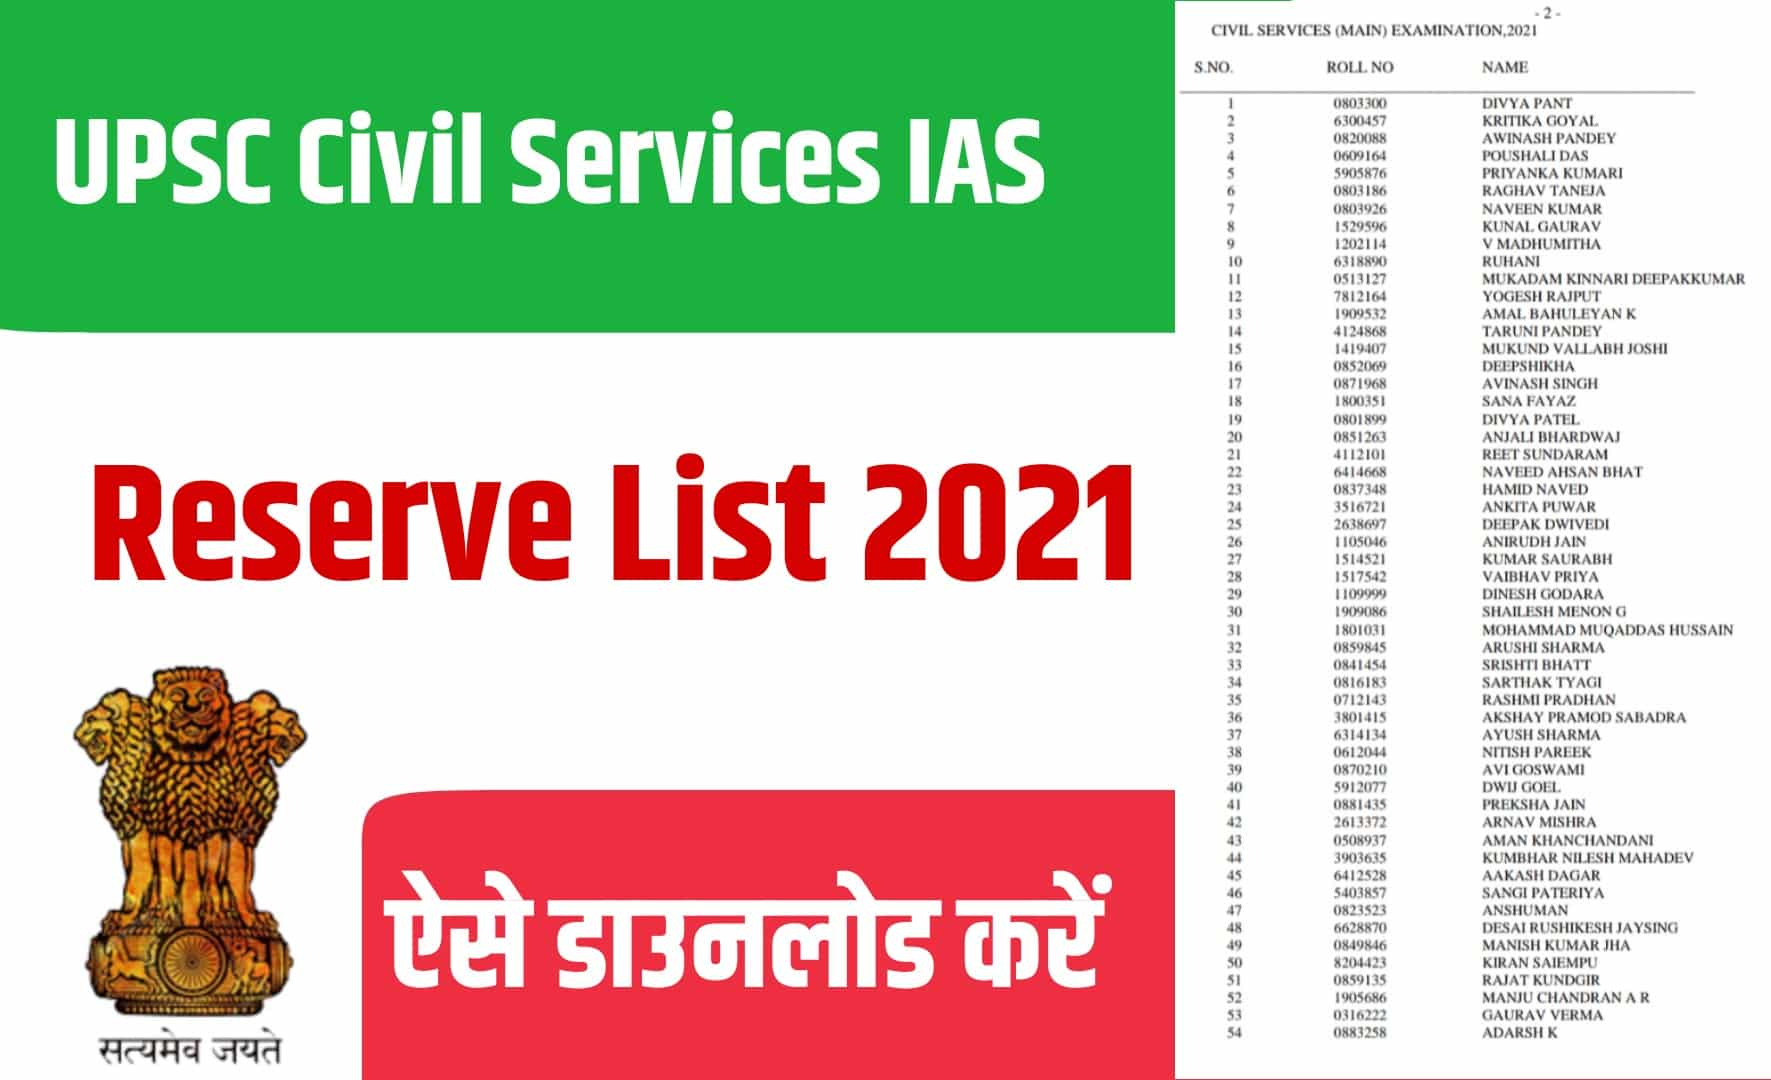 UPSC Civil Services IAS 2021 Reserve List | यूपीएसी सिविल सर्विस आईएस 2021 रिजर्व लिस्ट जारी